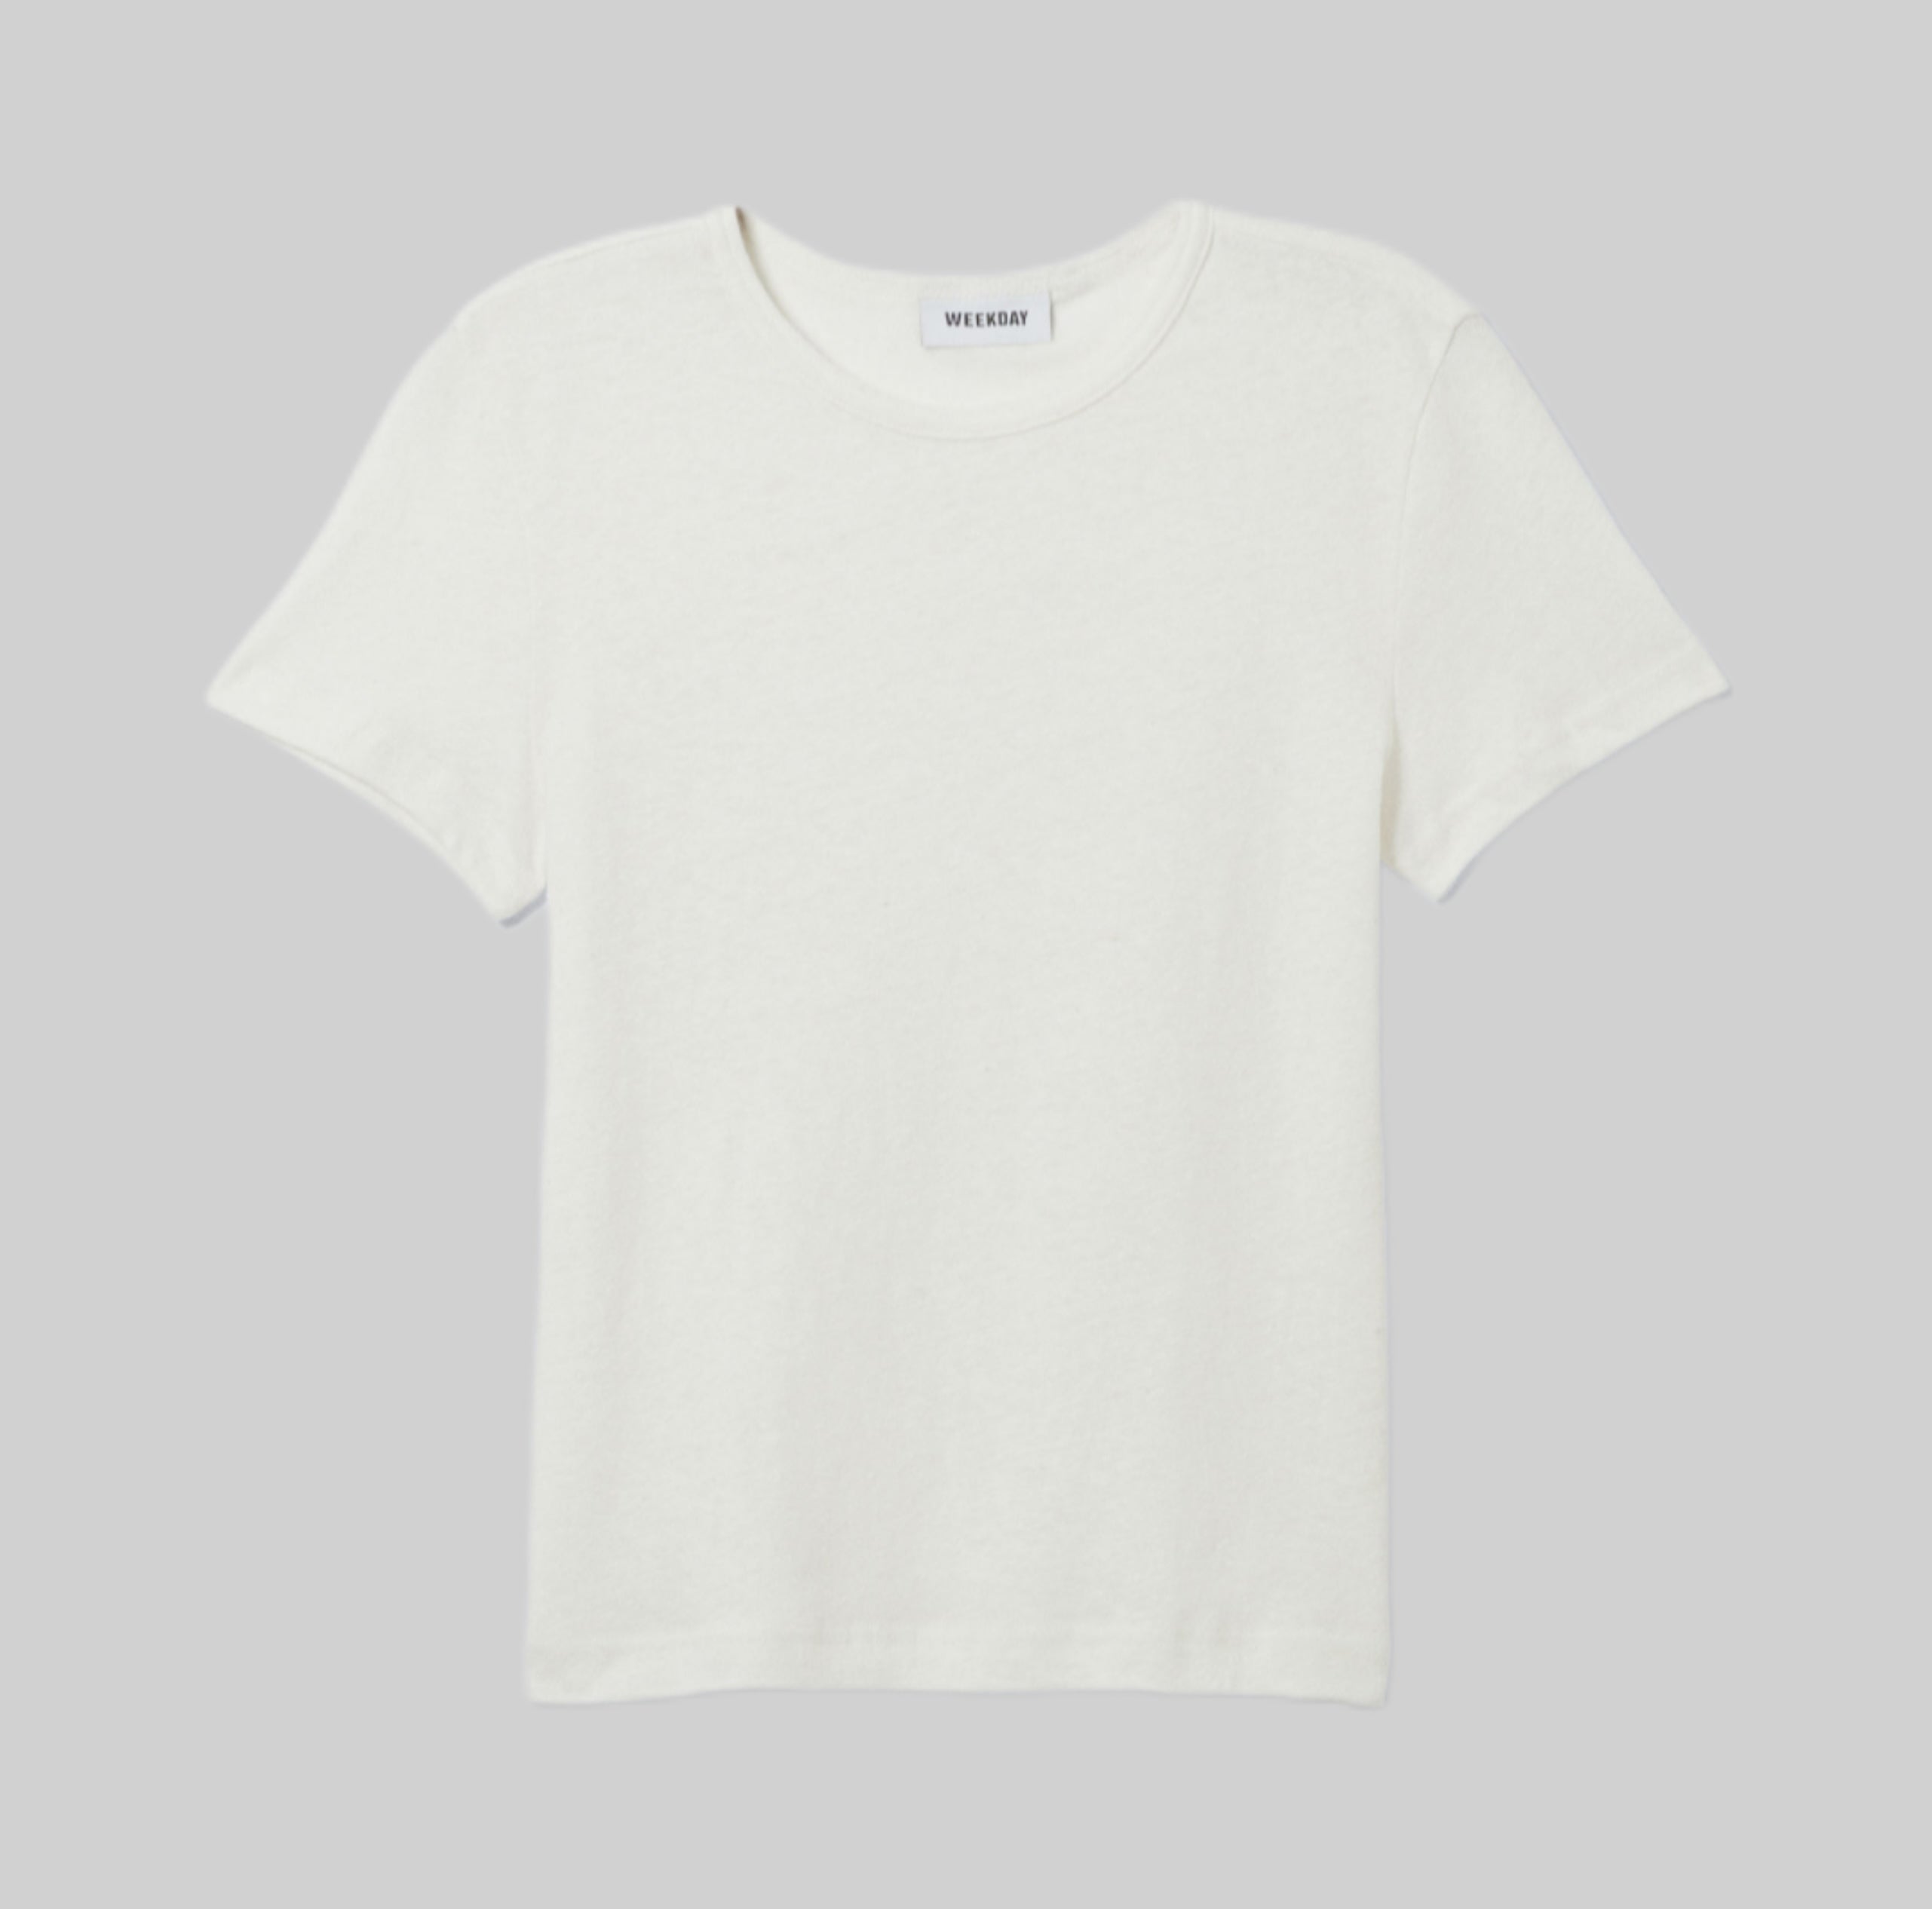 Weekday t-shirt, white, women, frontside